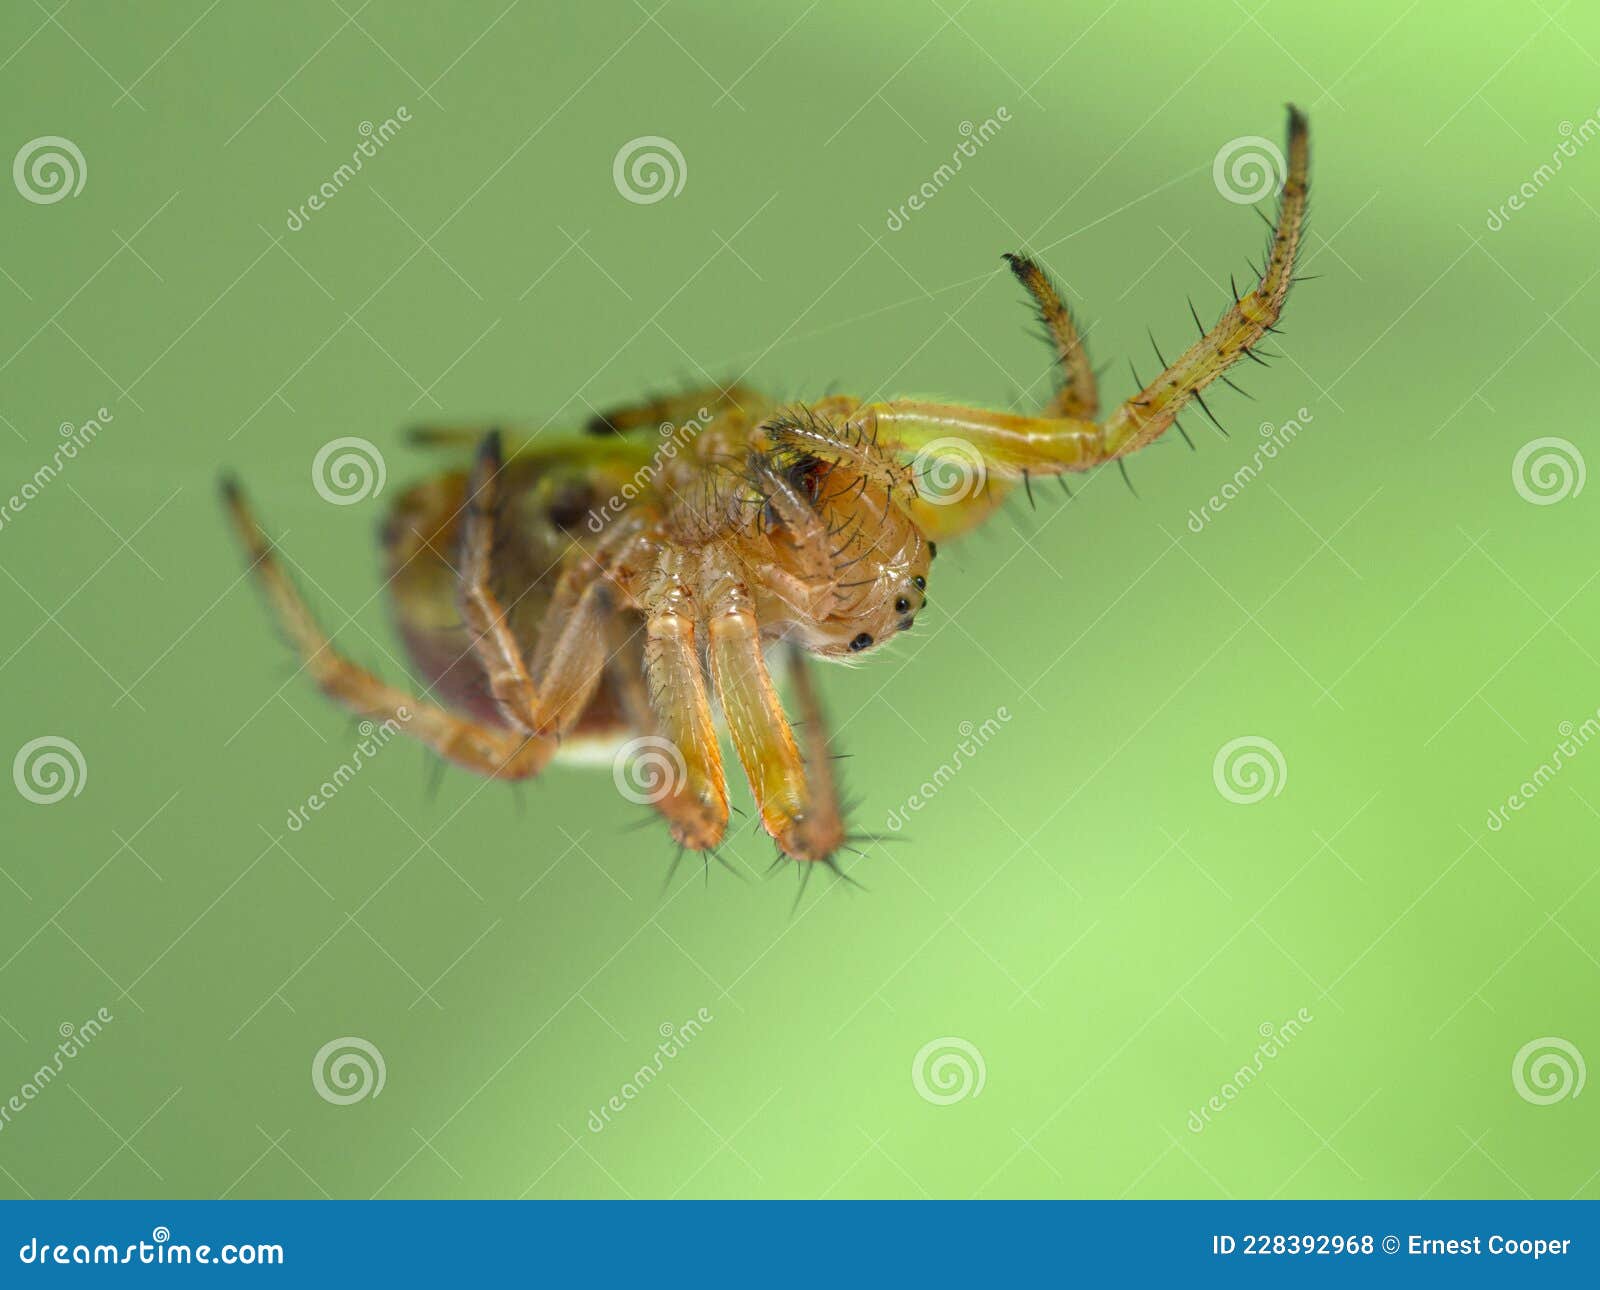 p1010082 close-up of a tiny sixspotted orbweaver spider, araniella displicata cecp 2020